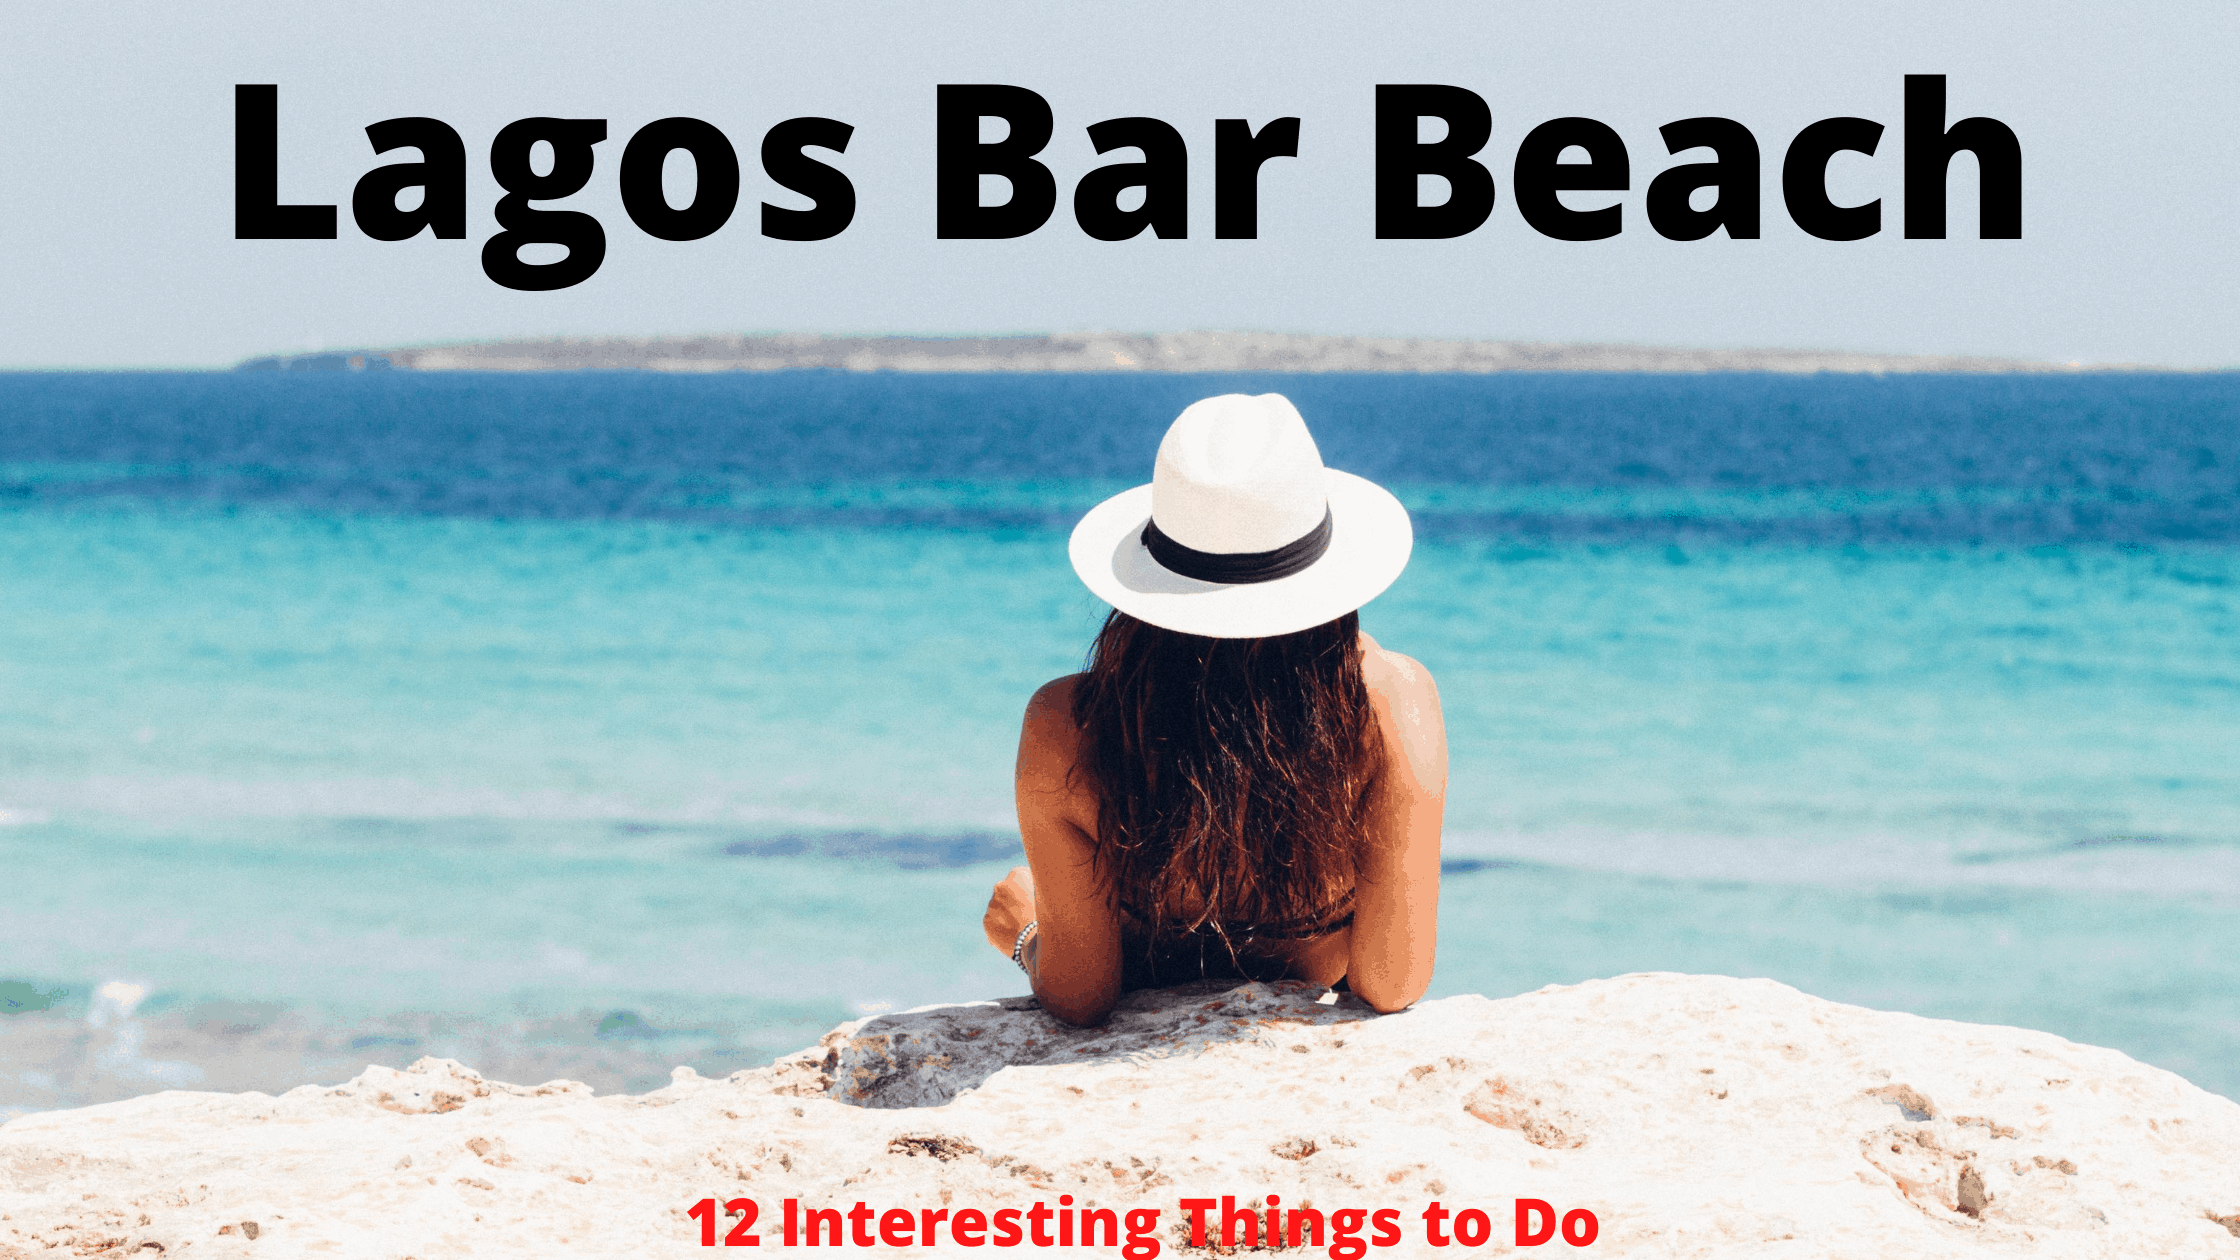 Lagos Bar Beach: 12 Interesting Things to Do at the Beach